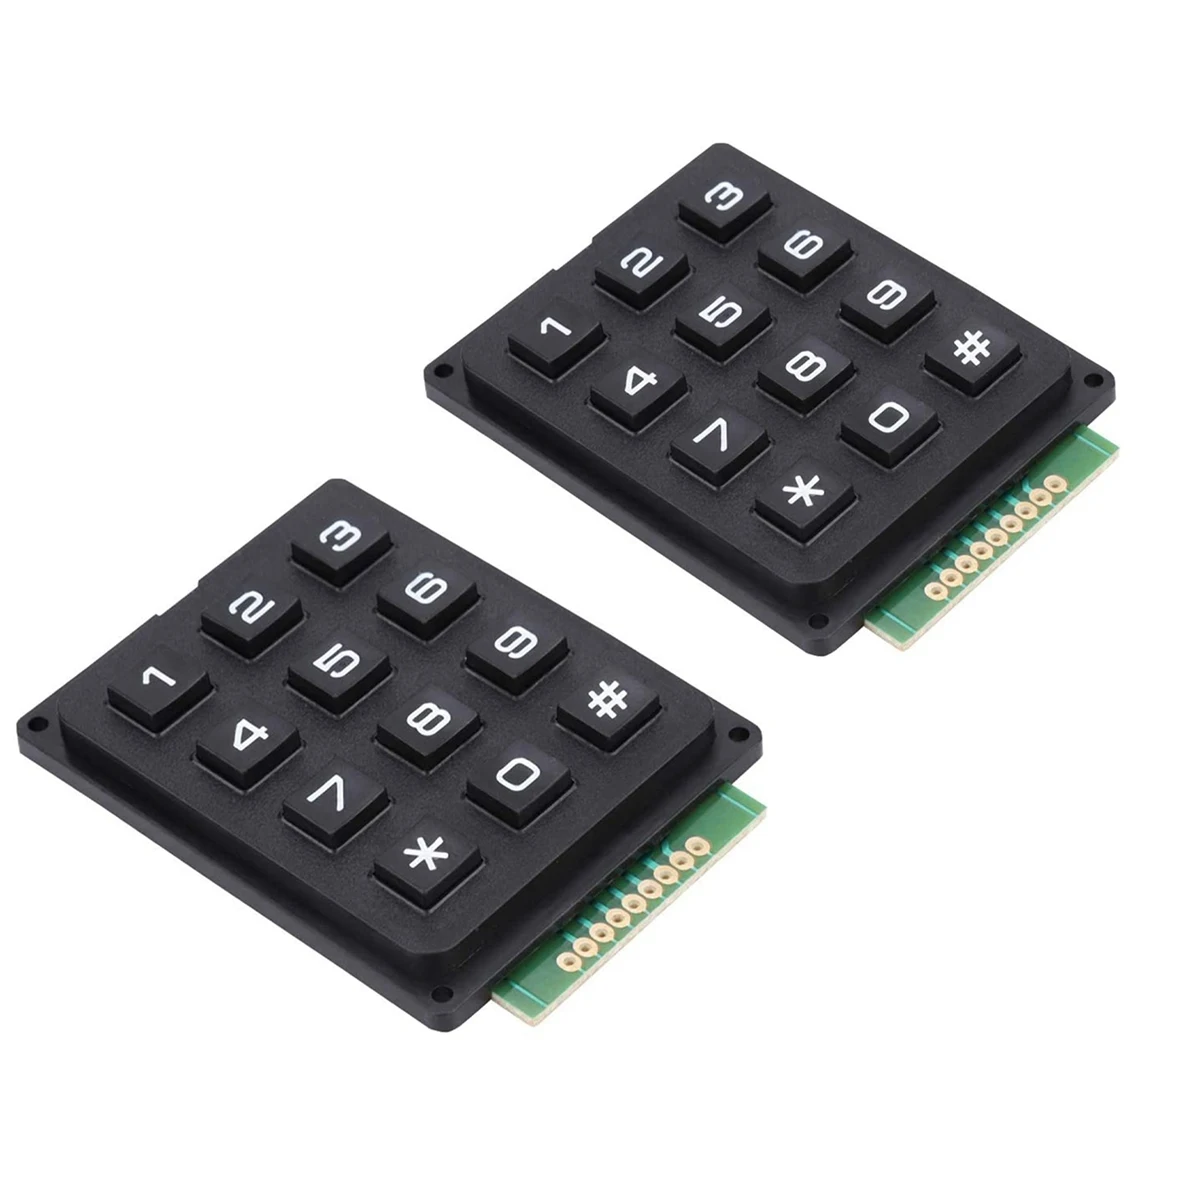 

2Pcs Matrix Switch Keyboard Keypad Array Module ABS Plastic Keys 3X4 12 Key Button Membrane Switch DIY Kit for Arduino